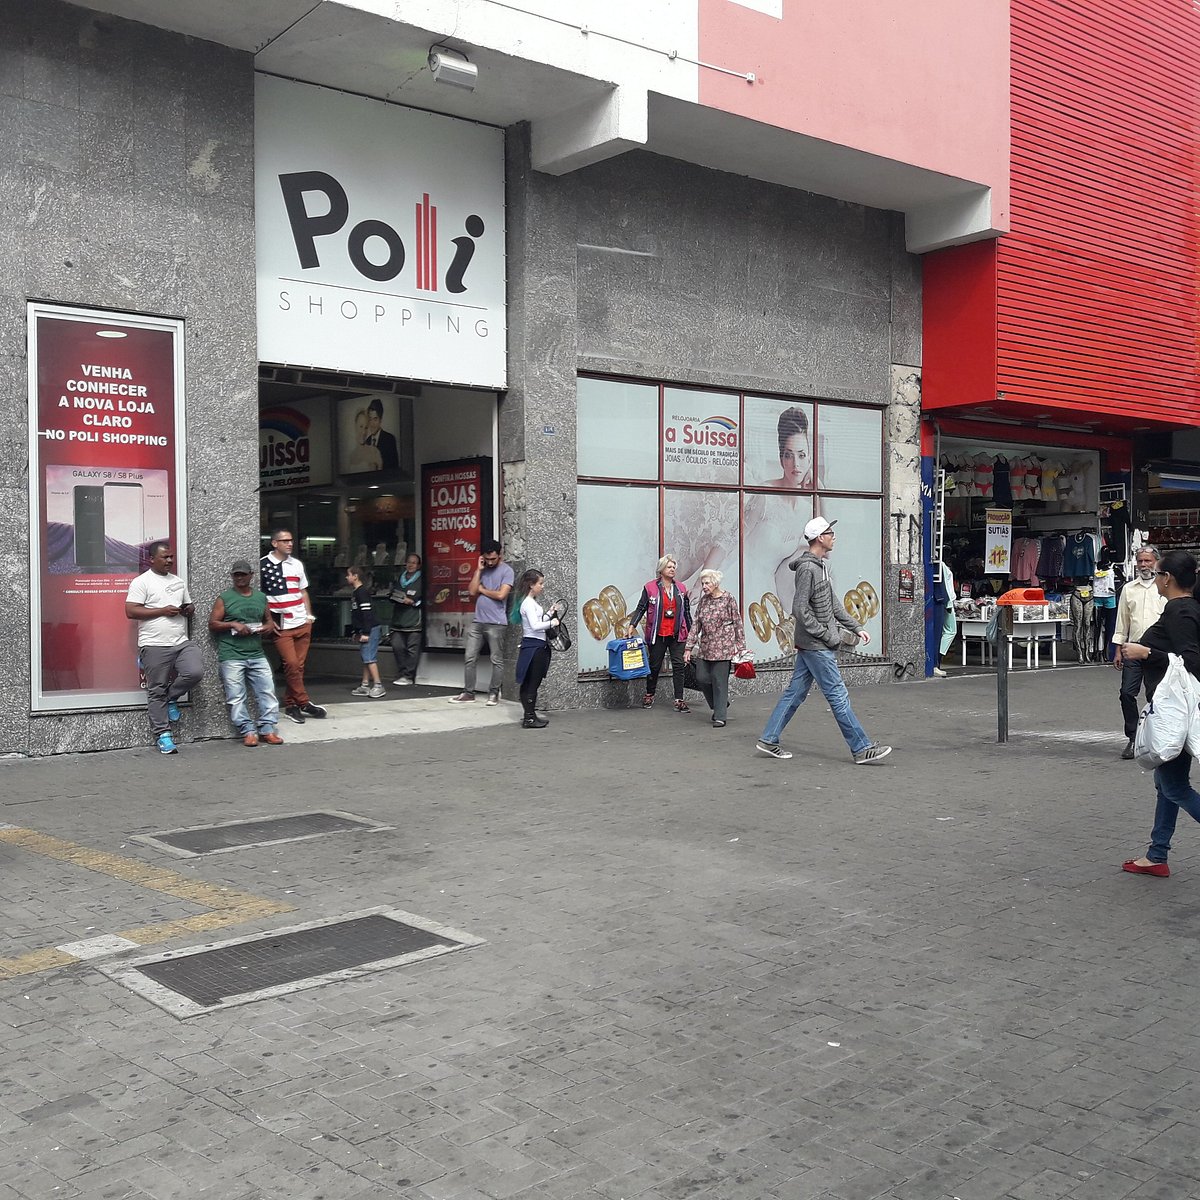 Poli Shopping Guarulhos - Encontra Guarulhos